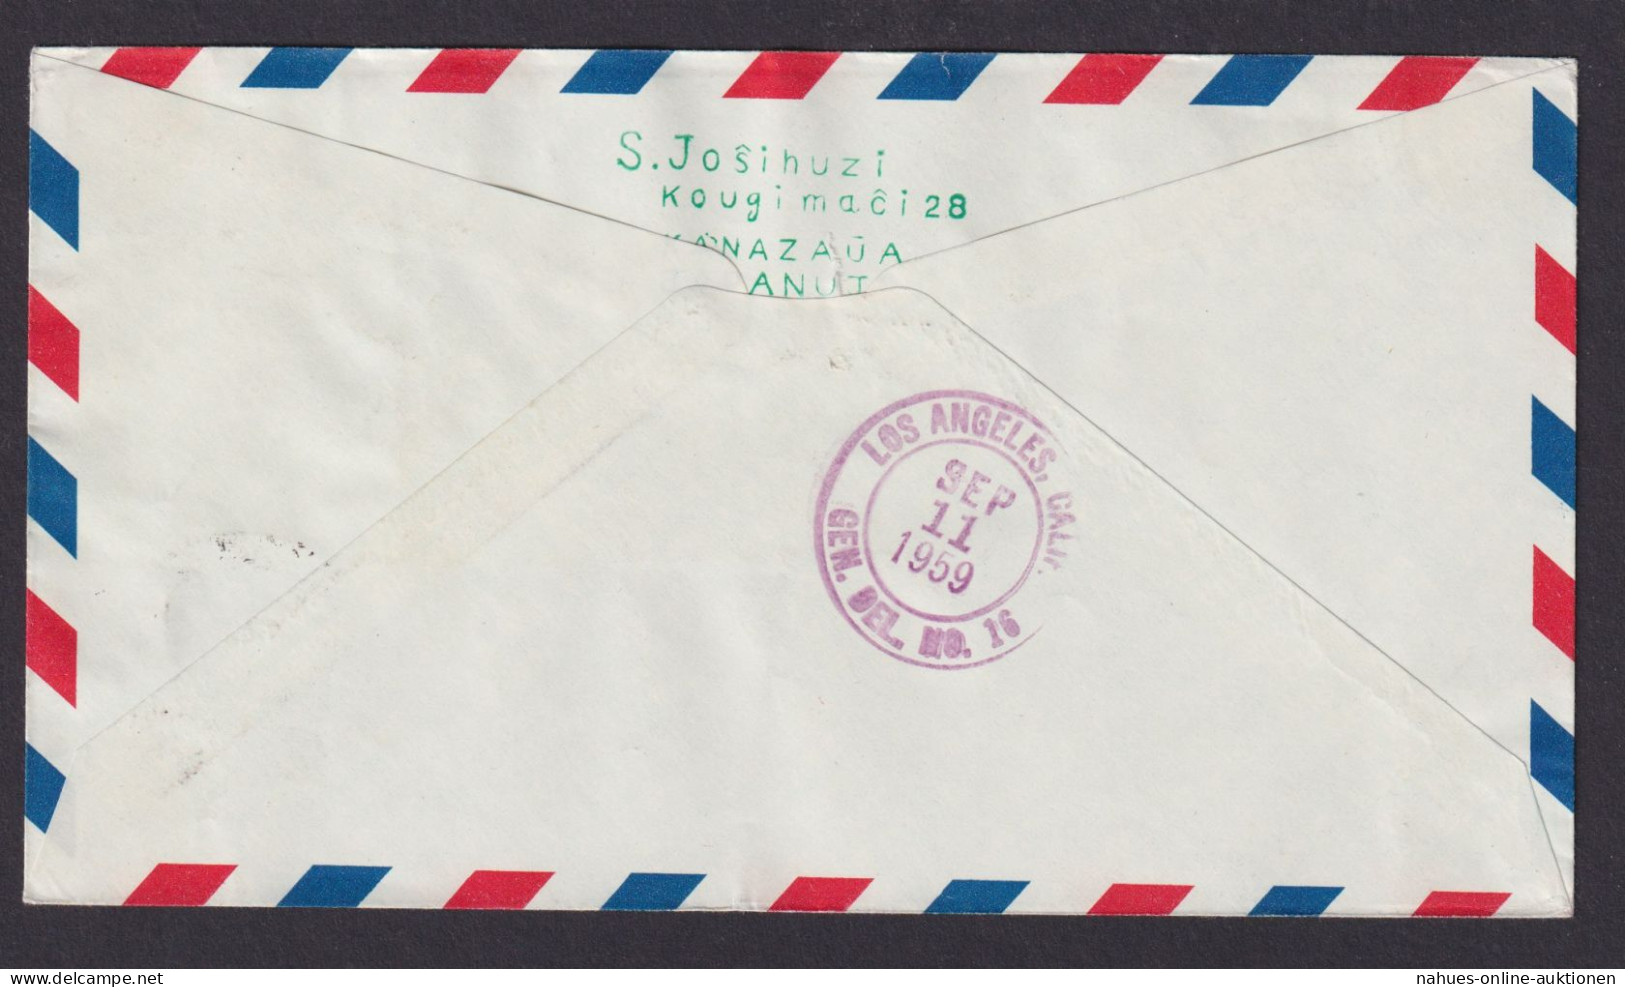 Flugpost Brief Air Mail Pan Am Jet Clipper Erstflug Tokio Japan Los Angeles USA - Storia Postale